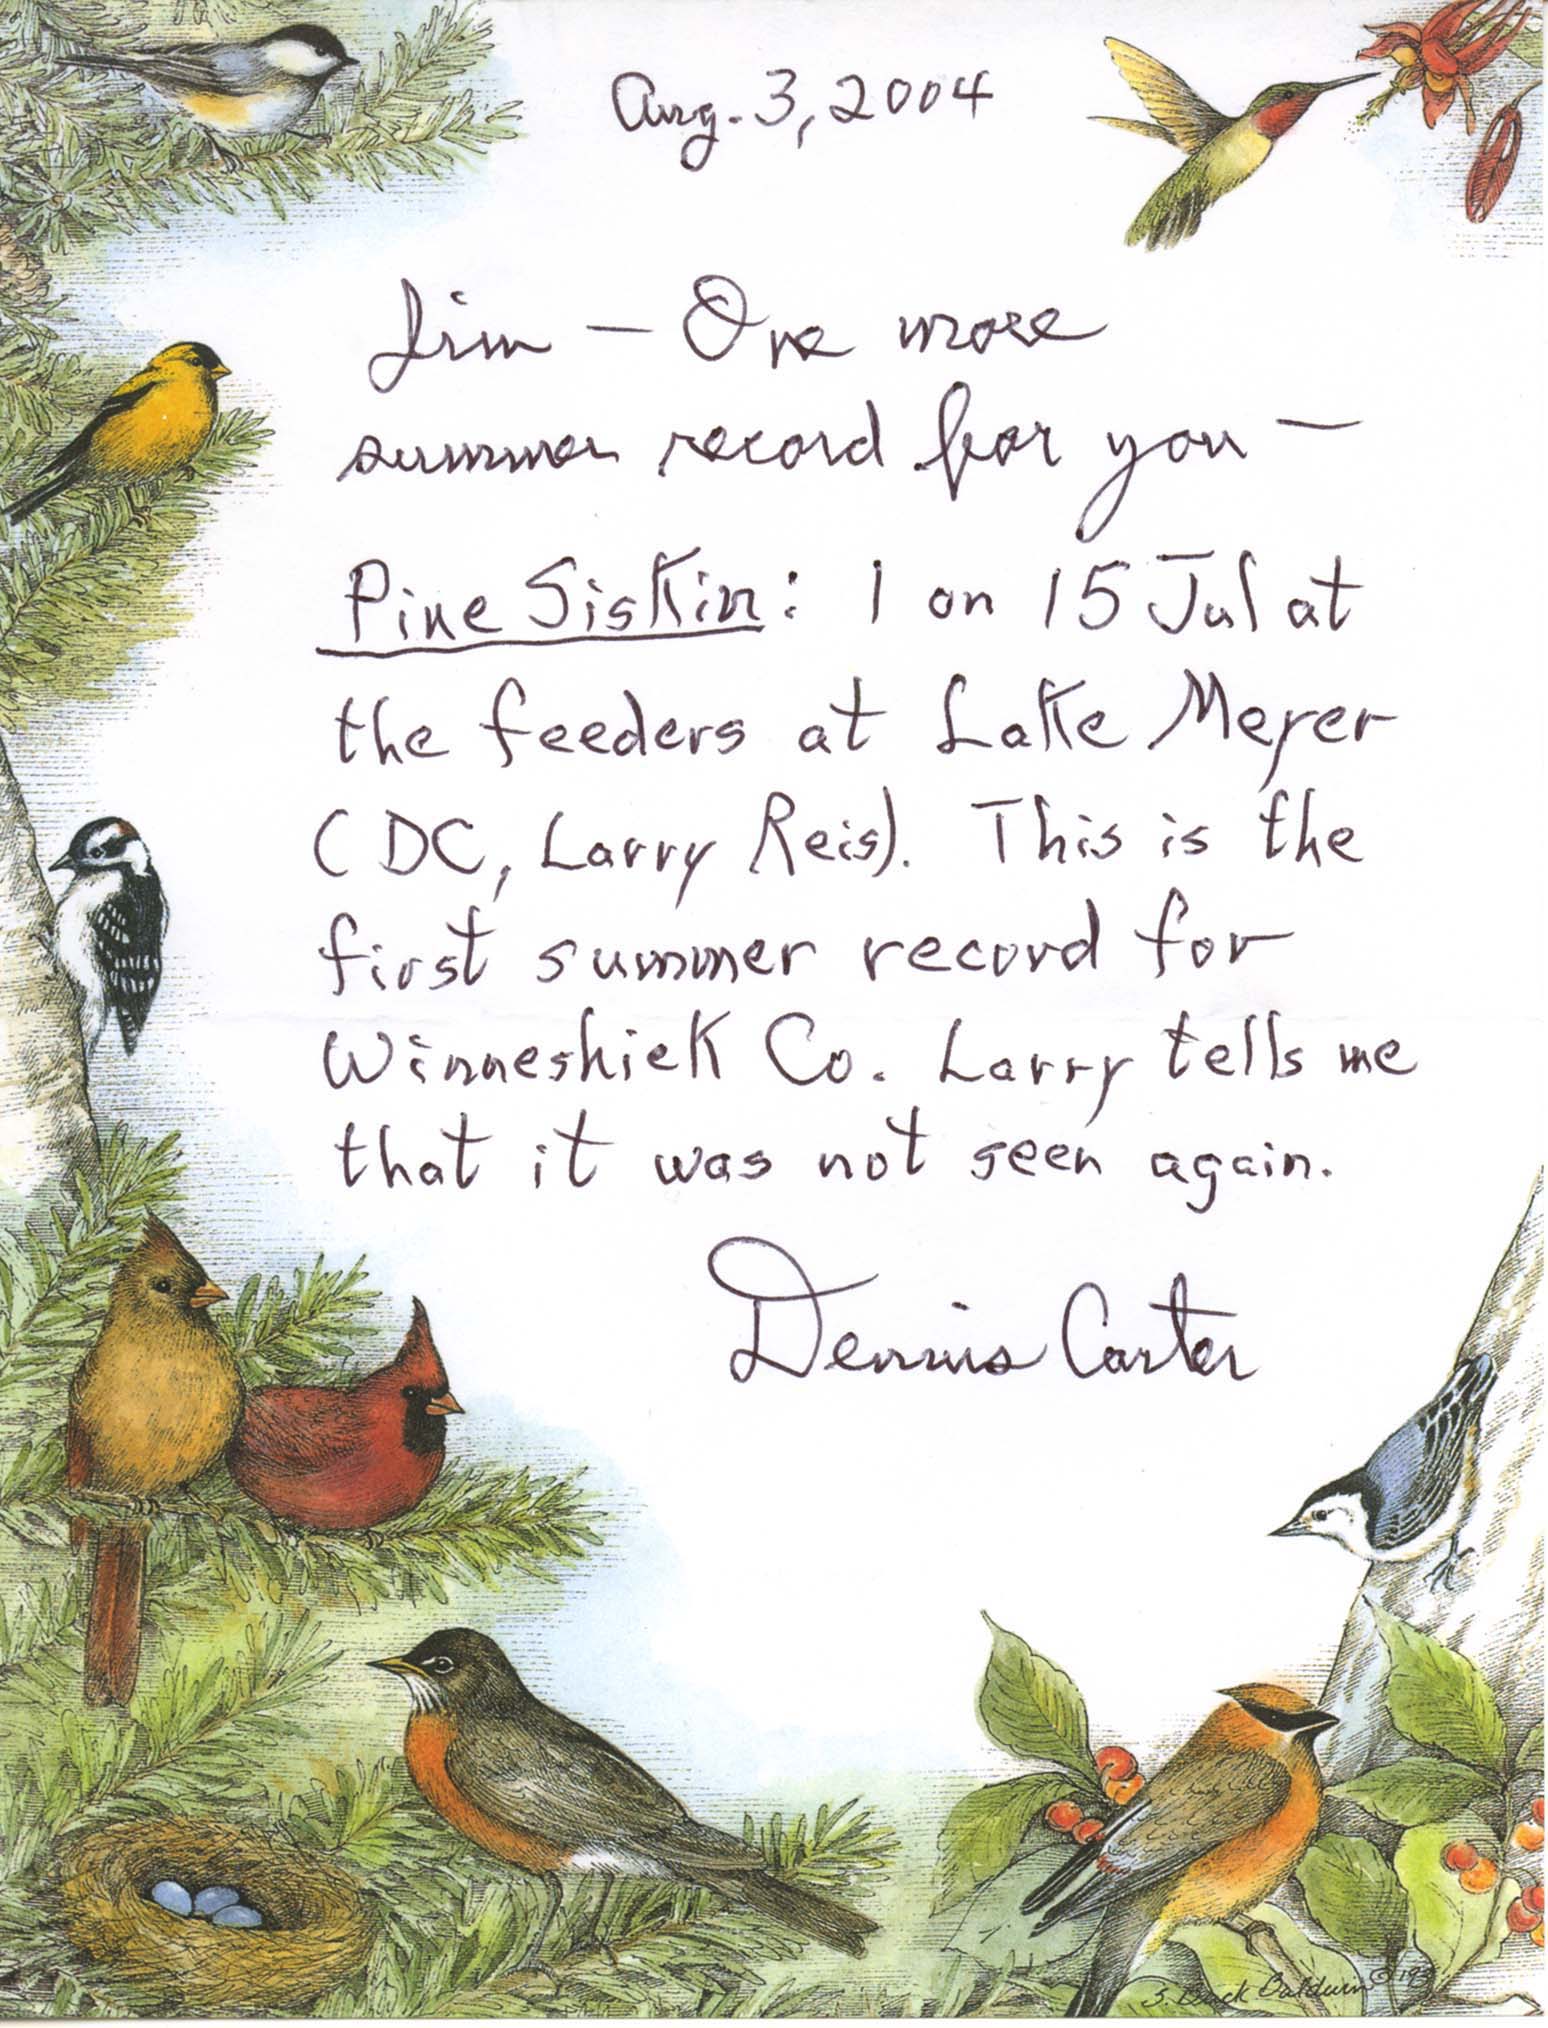 Dennis L. Carter letter to James J. Dinsmore regarding a Pine Siskin sighting, August 3, 2004